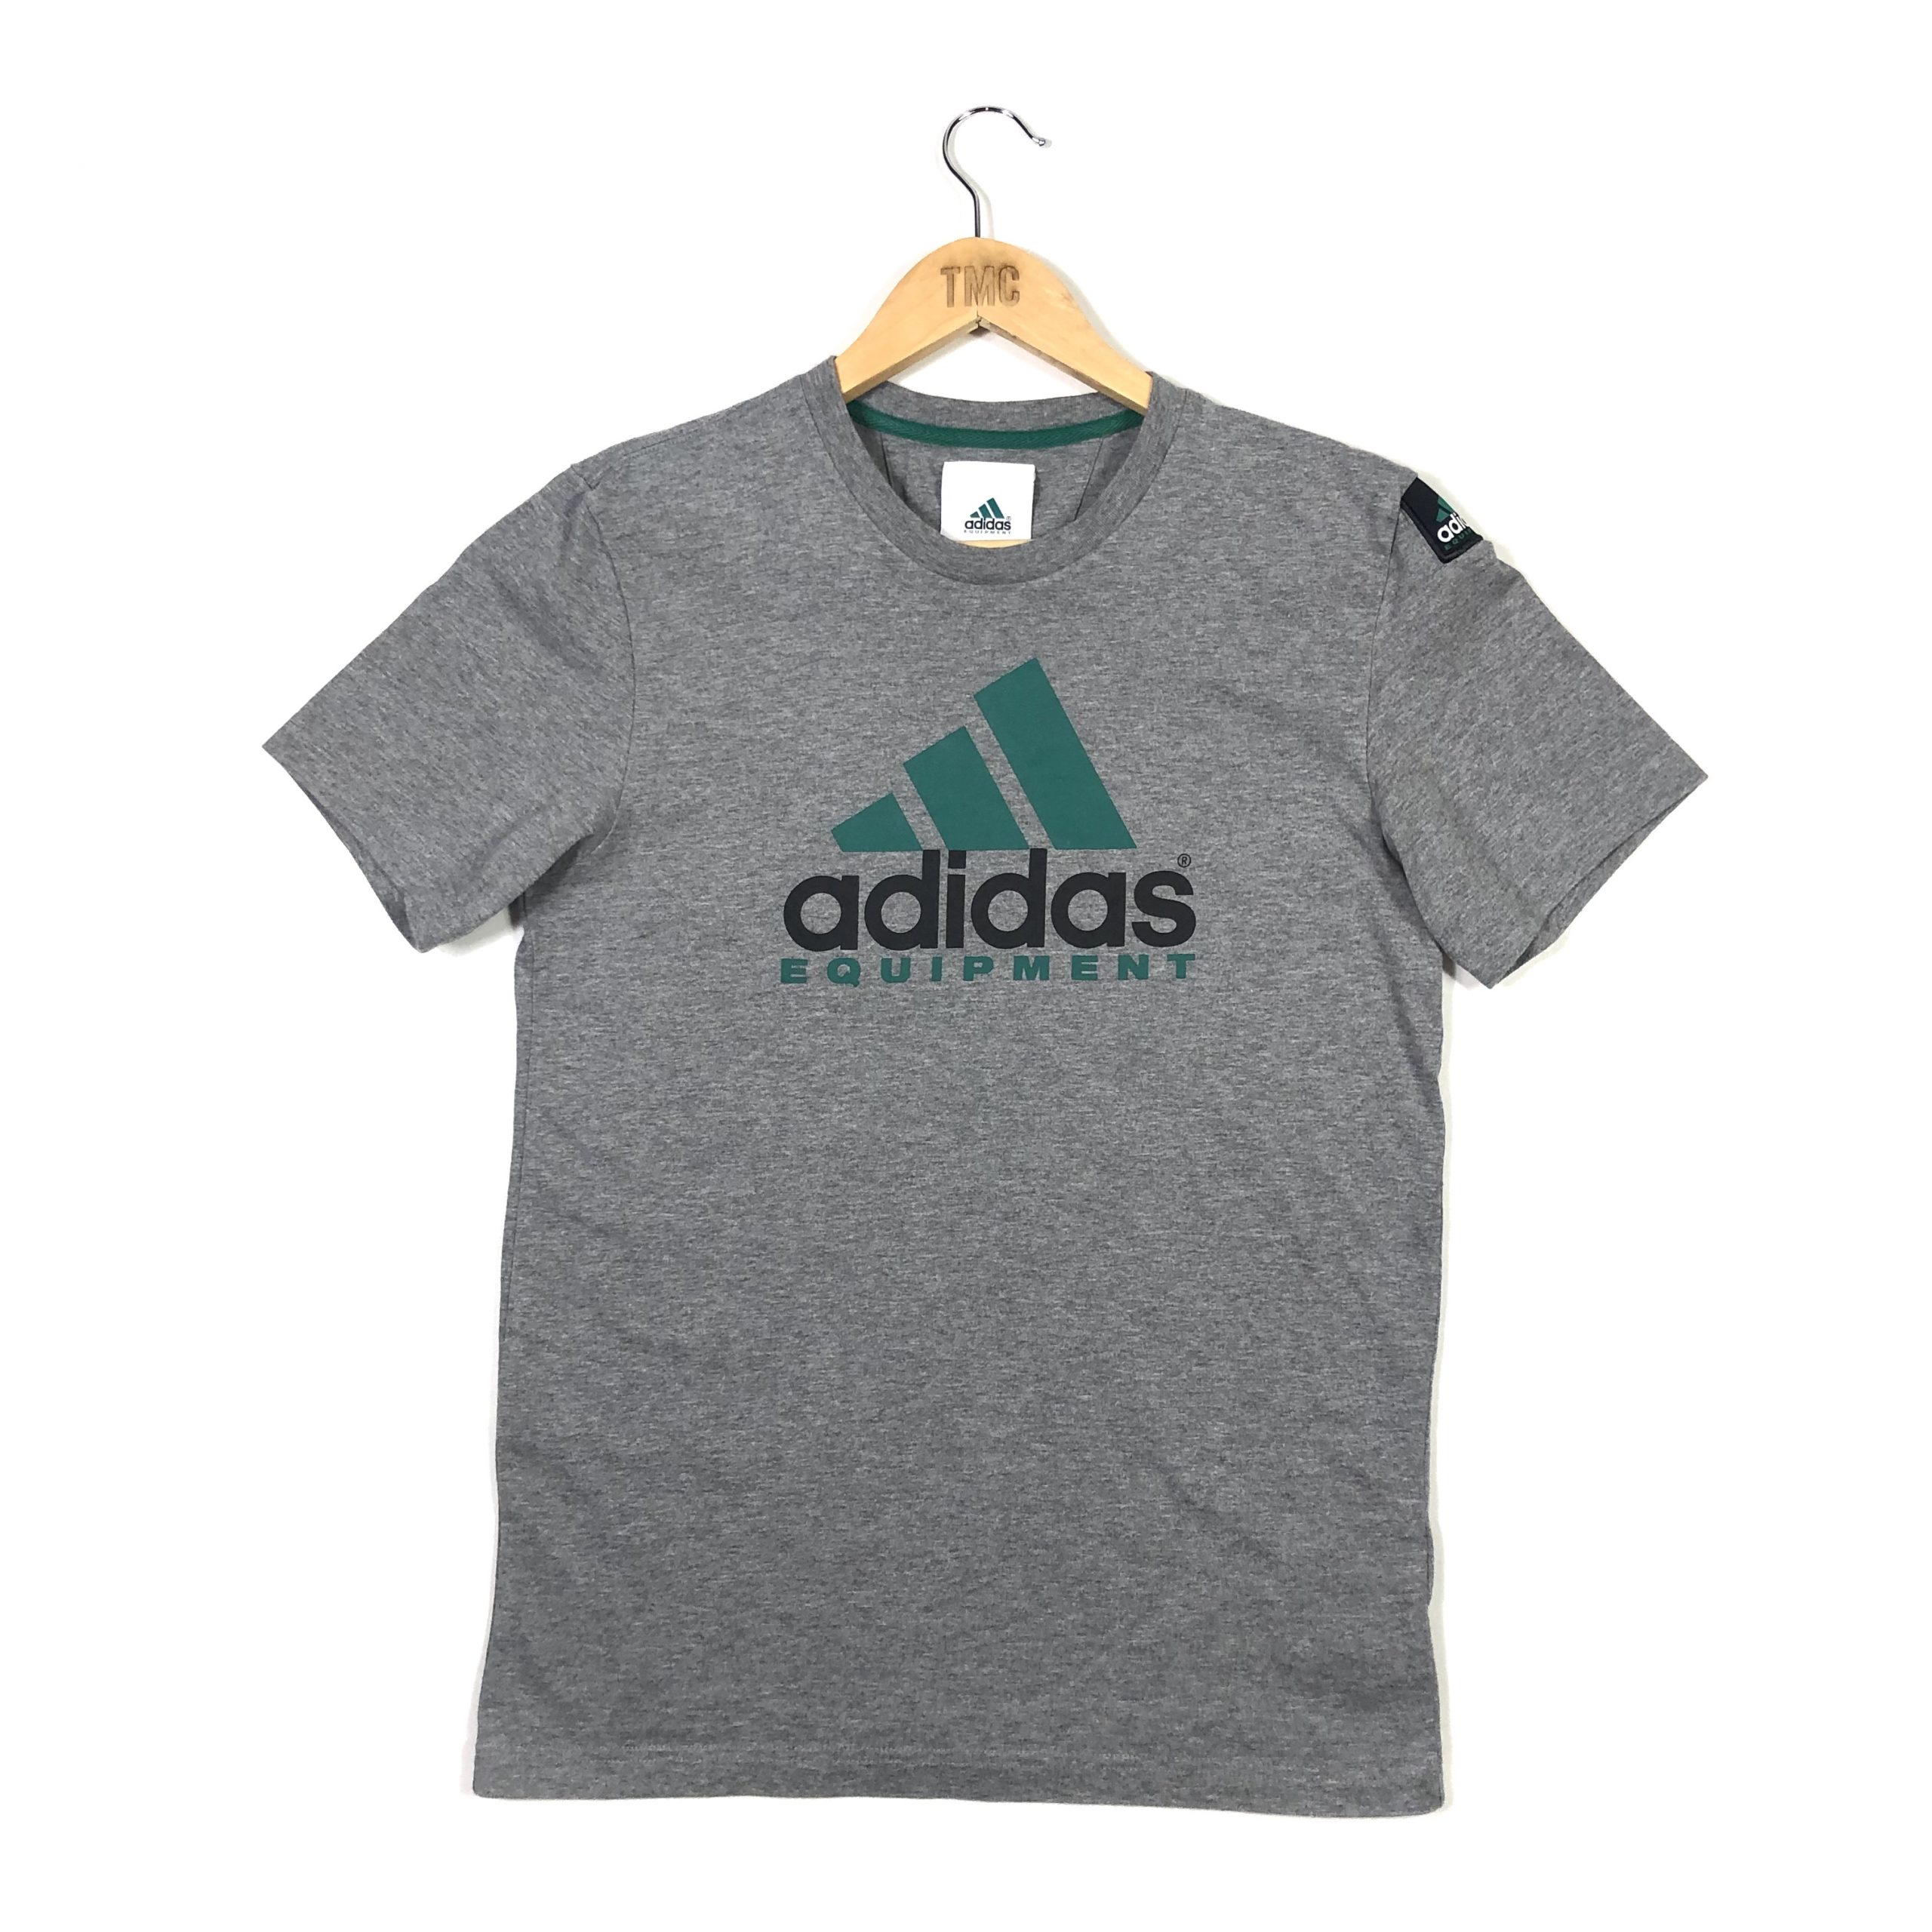 Adidas Equipment T-Shirt - Grey - S - TMC Vintage - Vintage Clothing